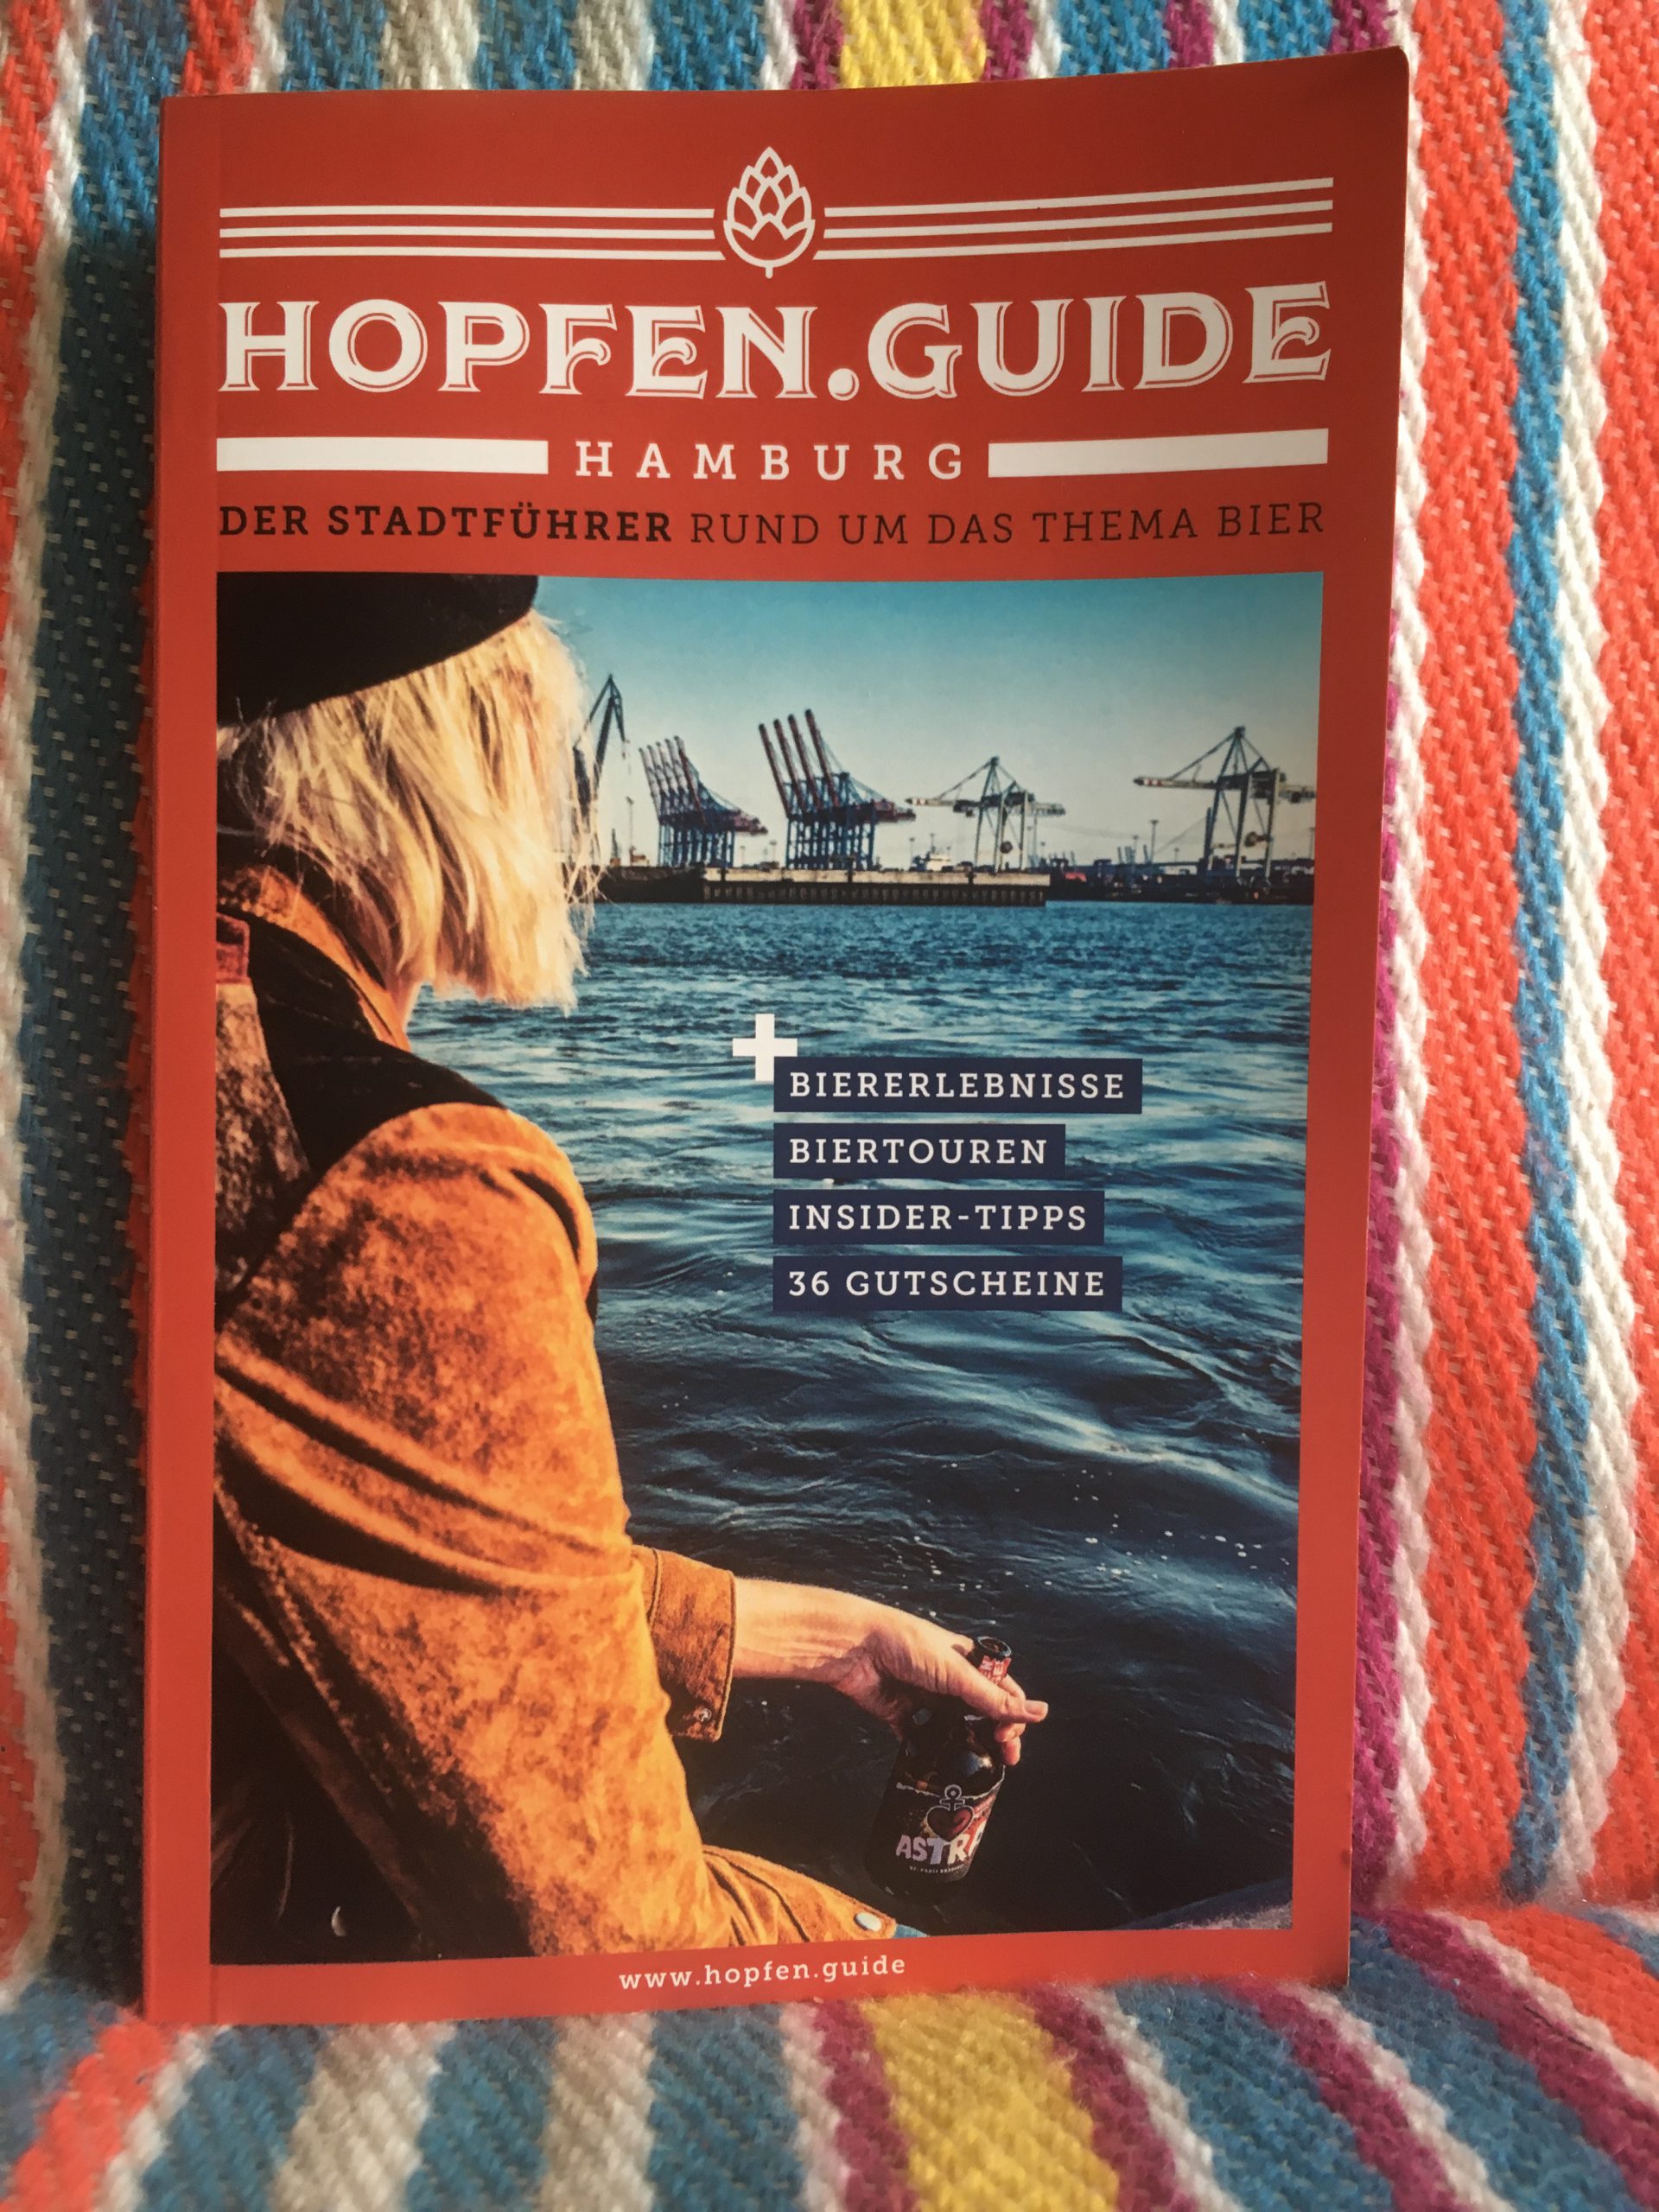 Hopfen.Guide Hambaurg